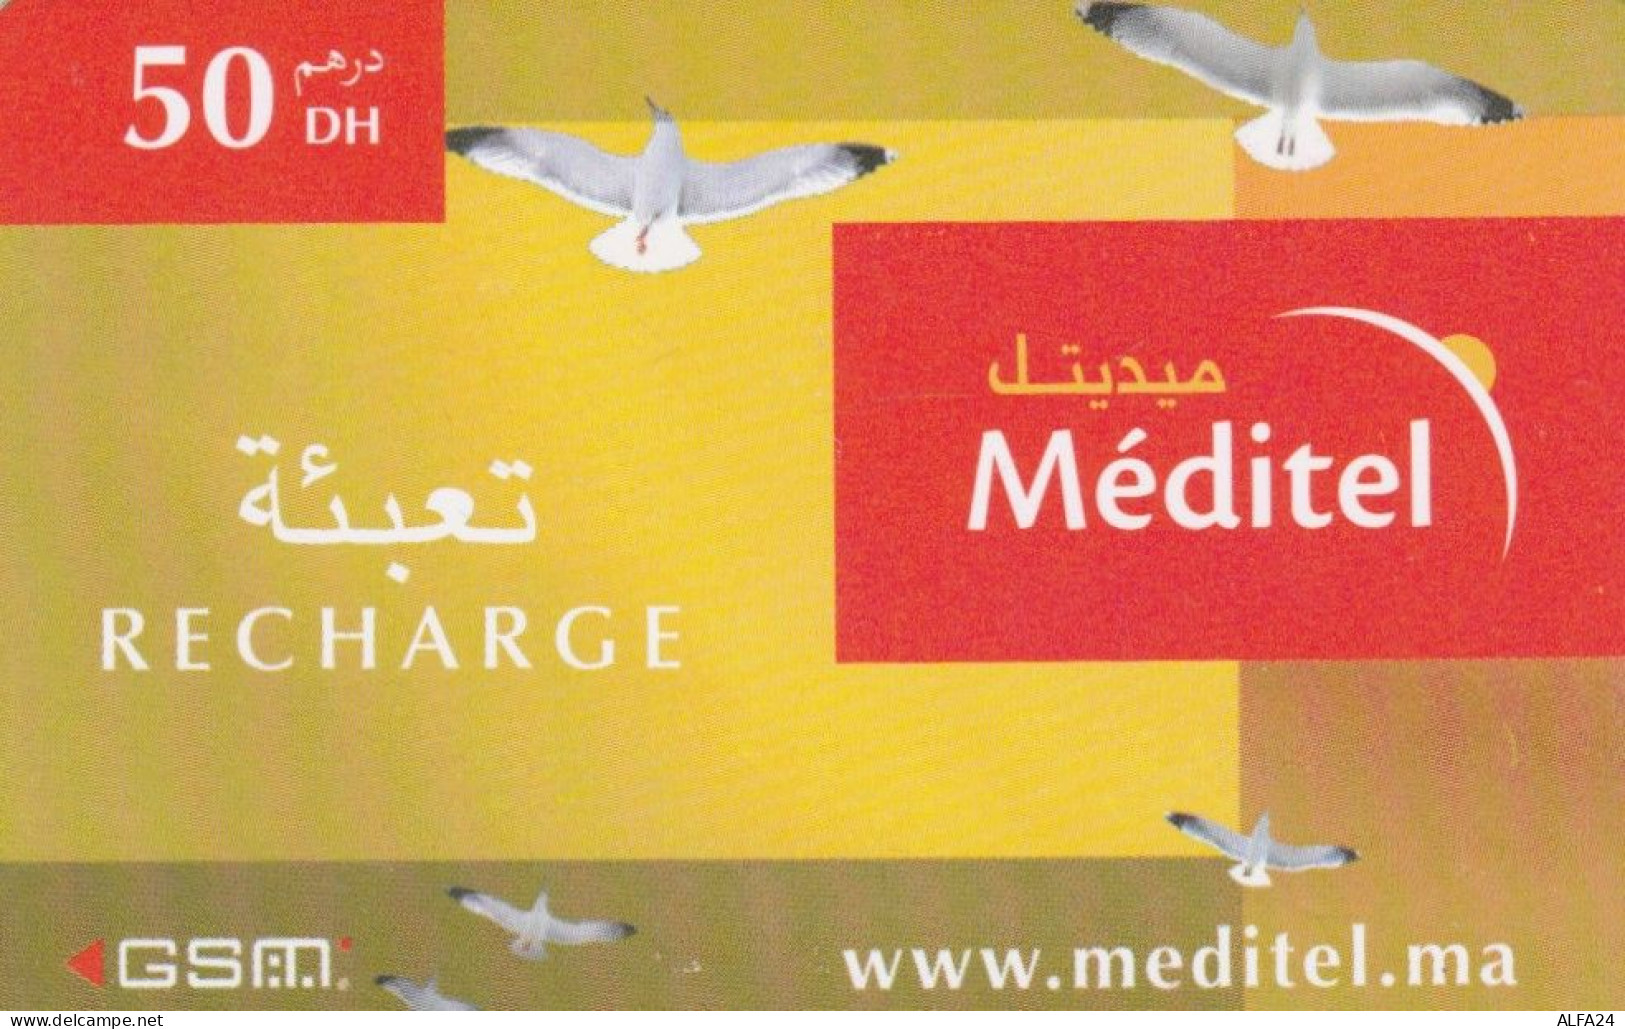 PREPAID PHONE CARD MAROCCO (PY2819 - Maroc